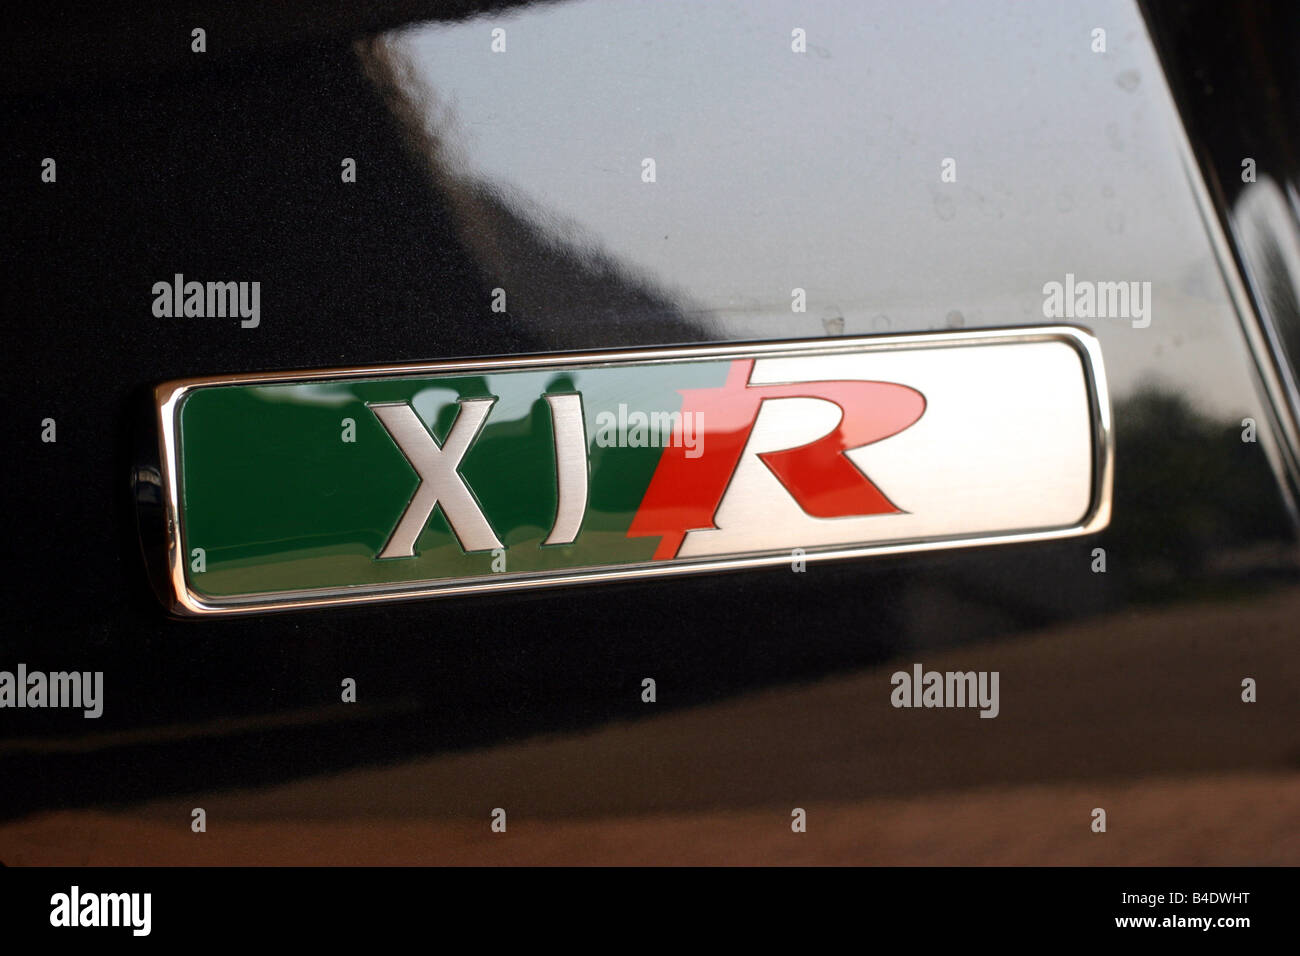 Car, Jaguar XJ R, Limousine, Luxury approx.s, model year 2003-, black, Detailed view, Model designation Stock Photo